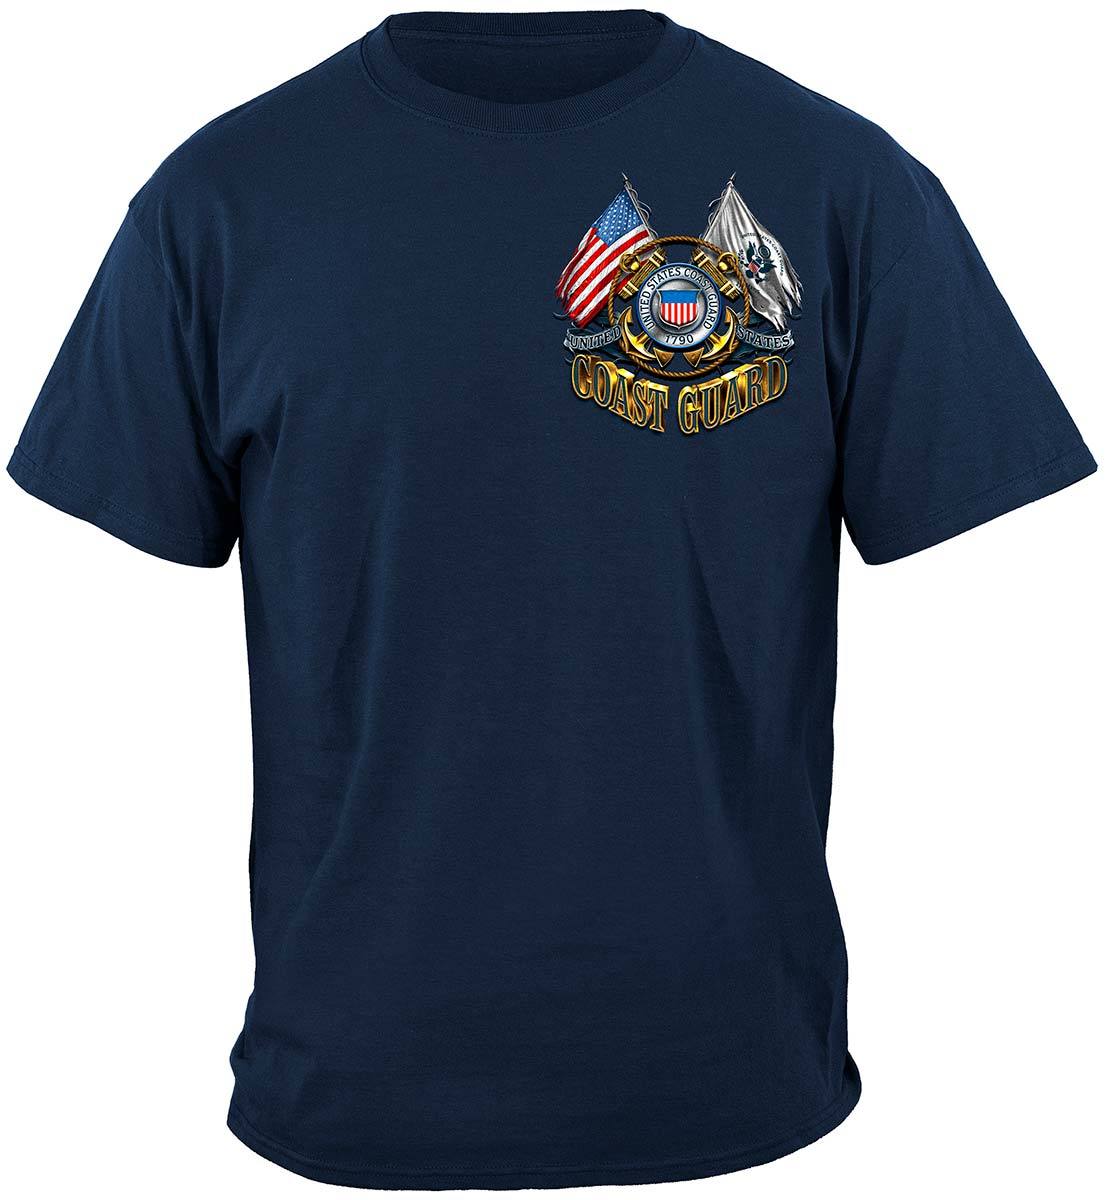 Double Flag Coast Guard Premium T-Shirt